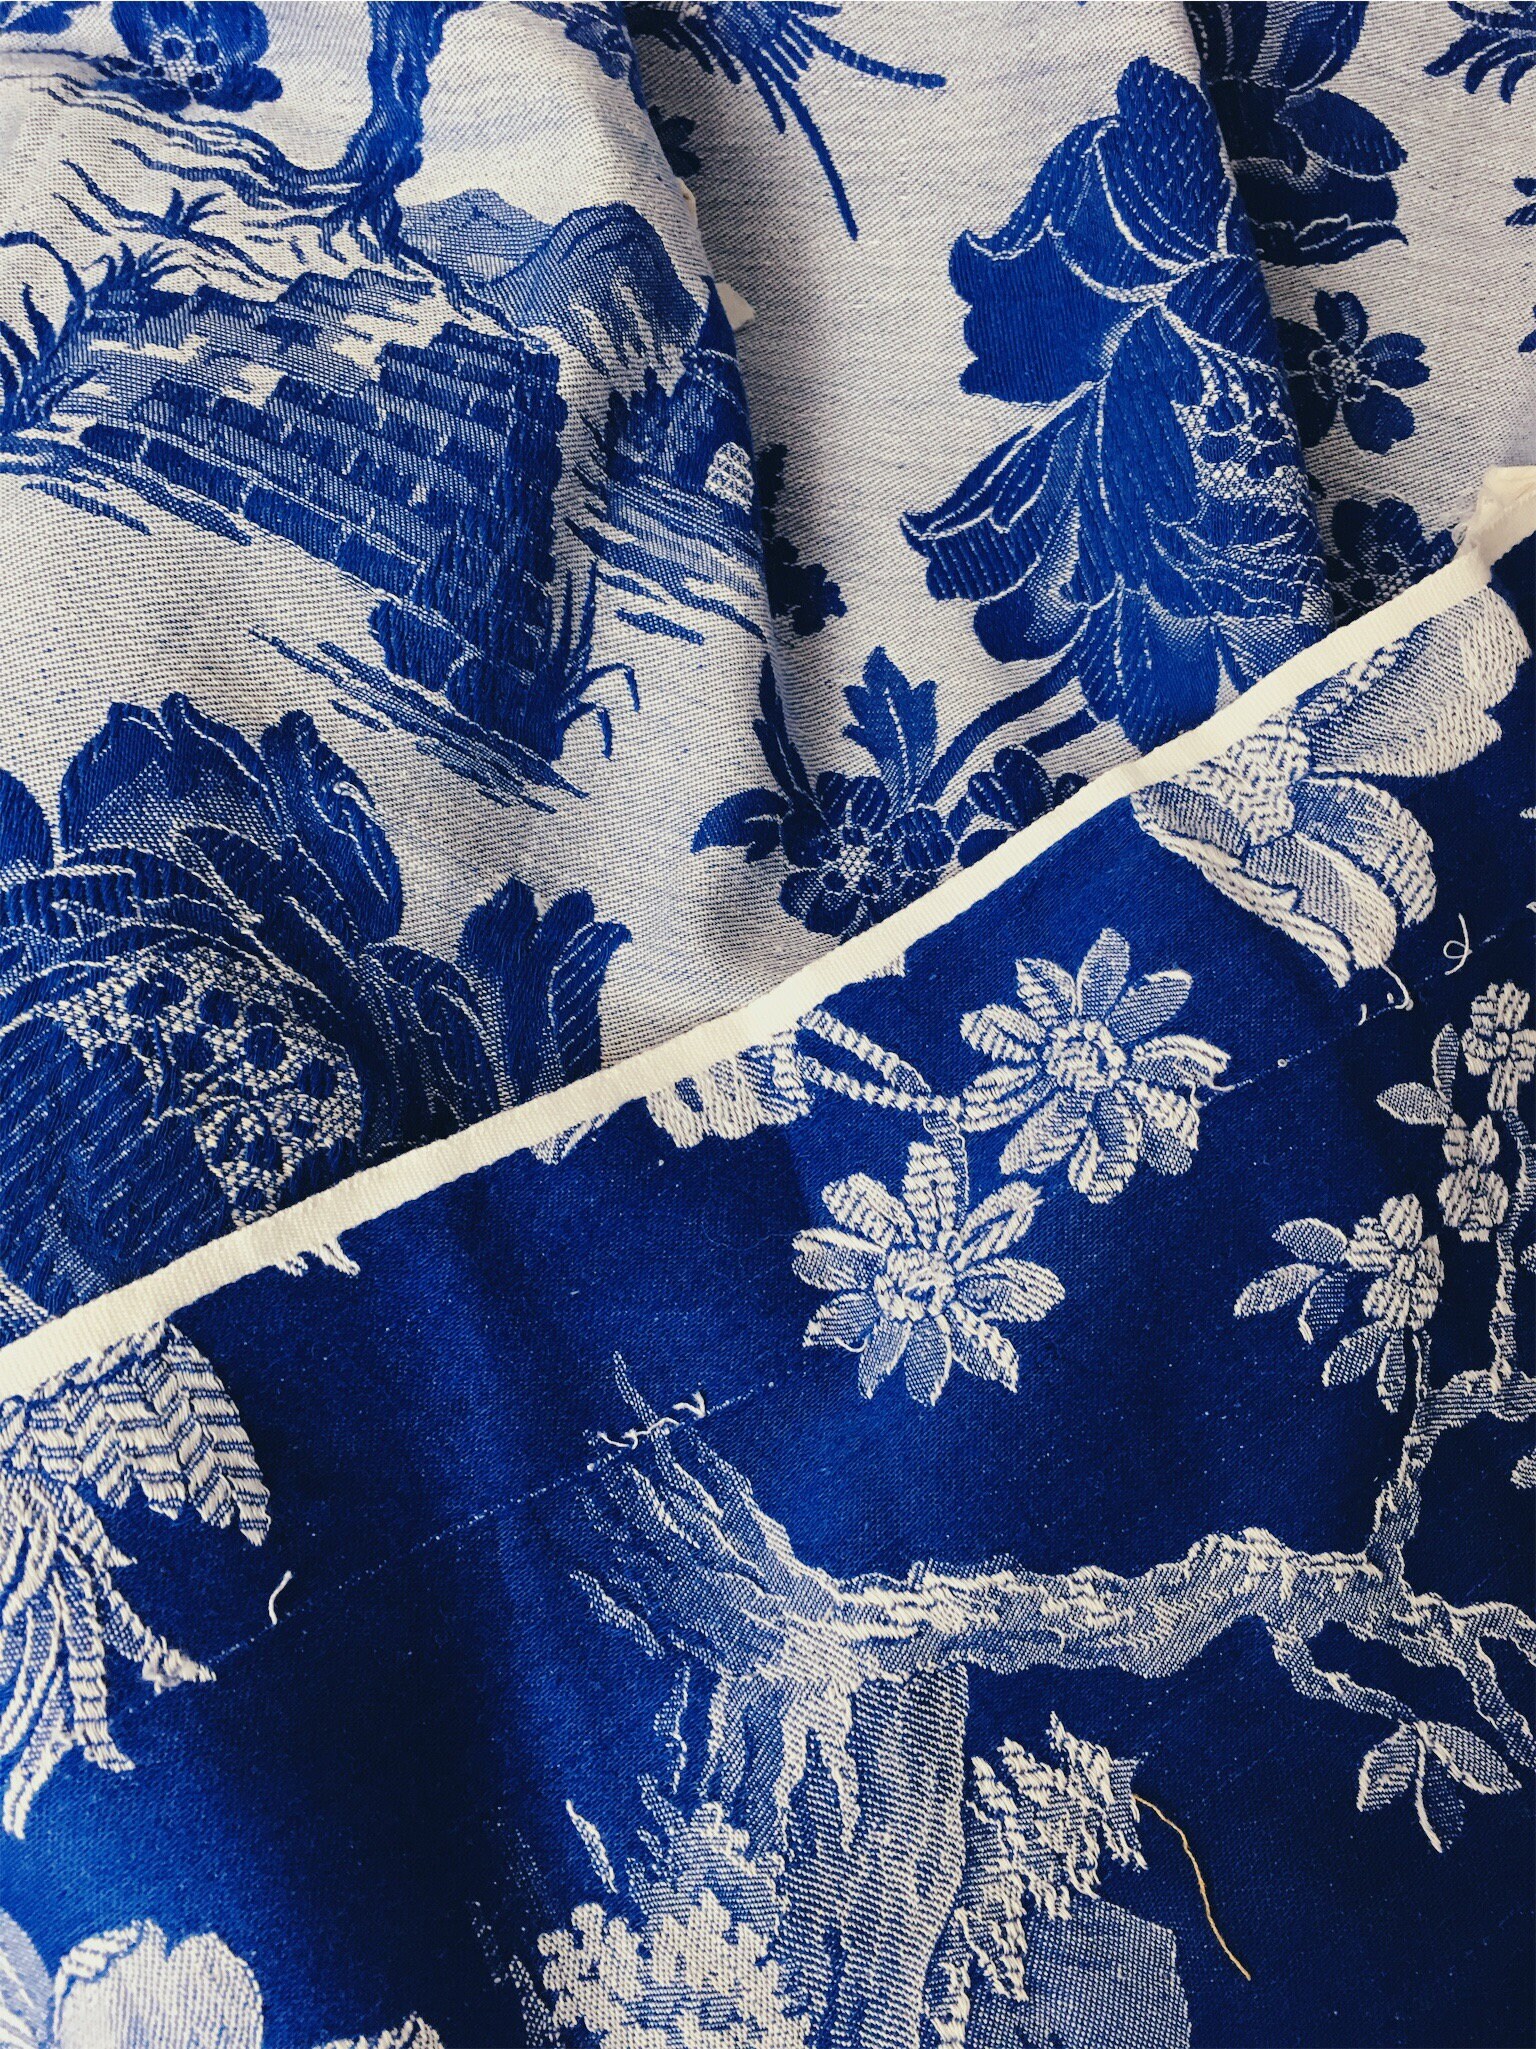 Blueprint paper - high res.  Blue napkins, Outdoor fabric, Cobalt